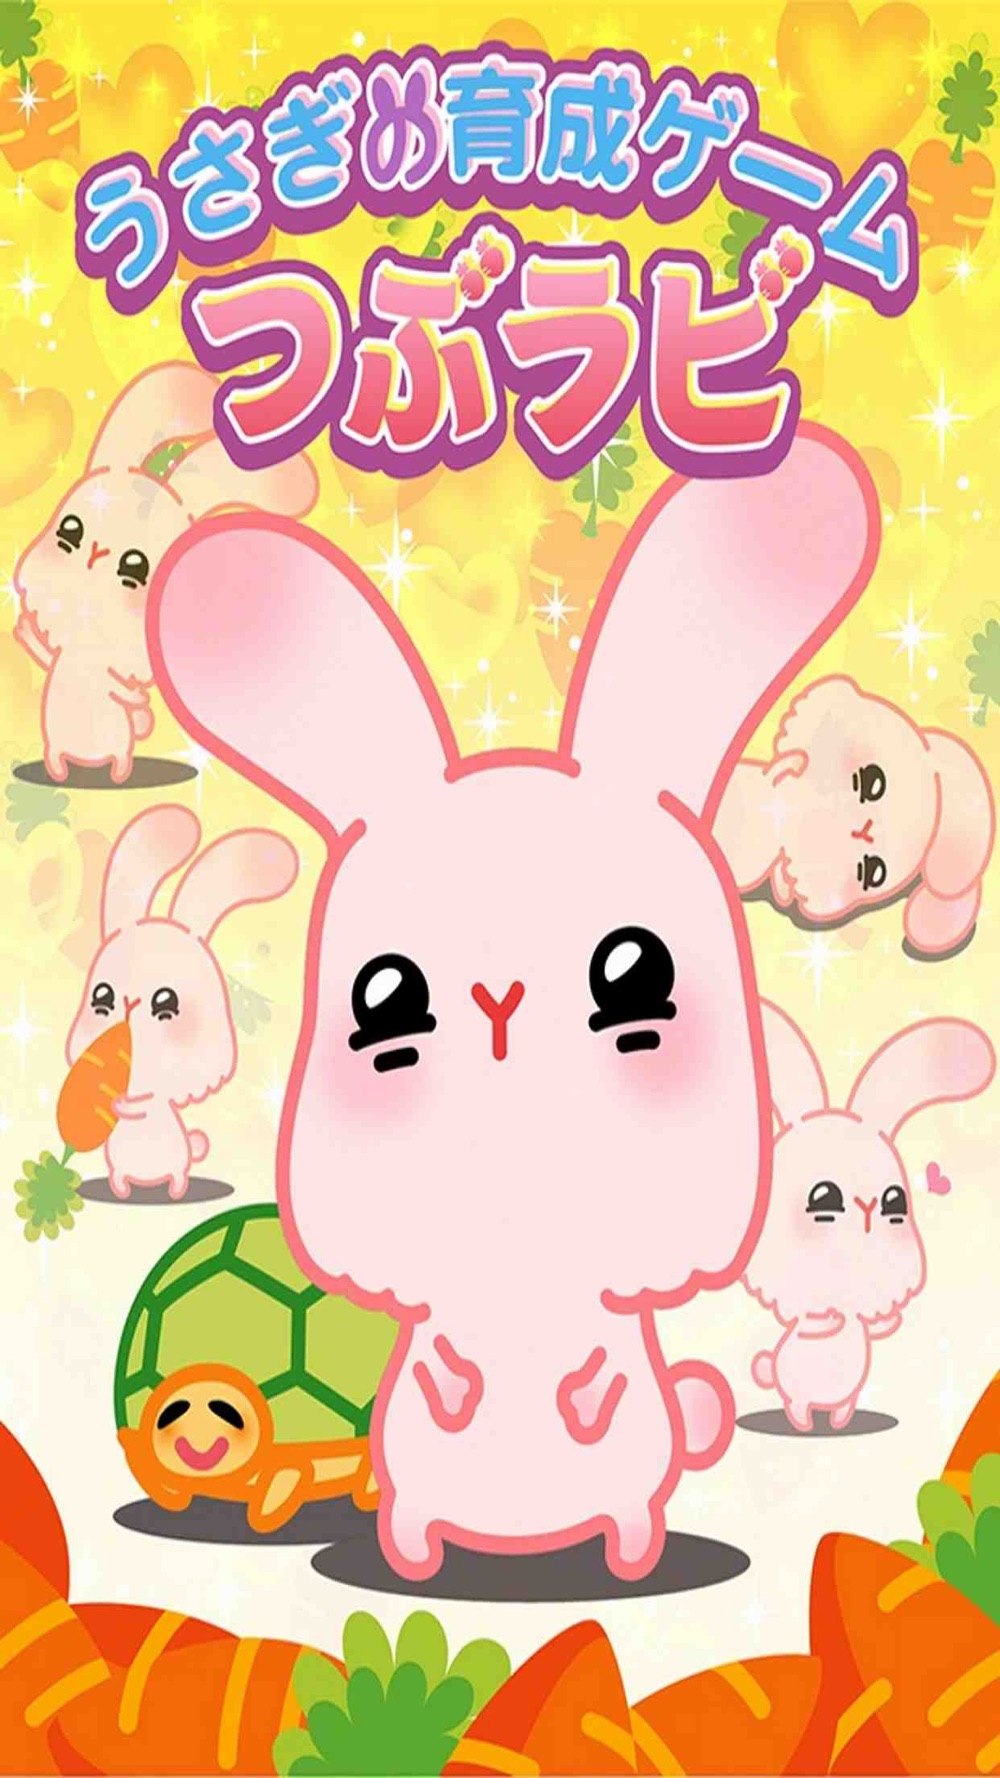 Tsubu-rabi! – The free cute rabbit collection game